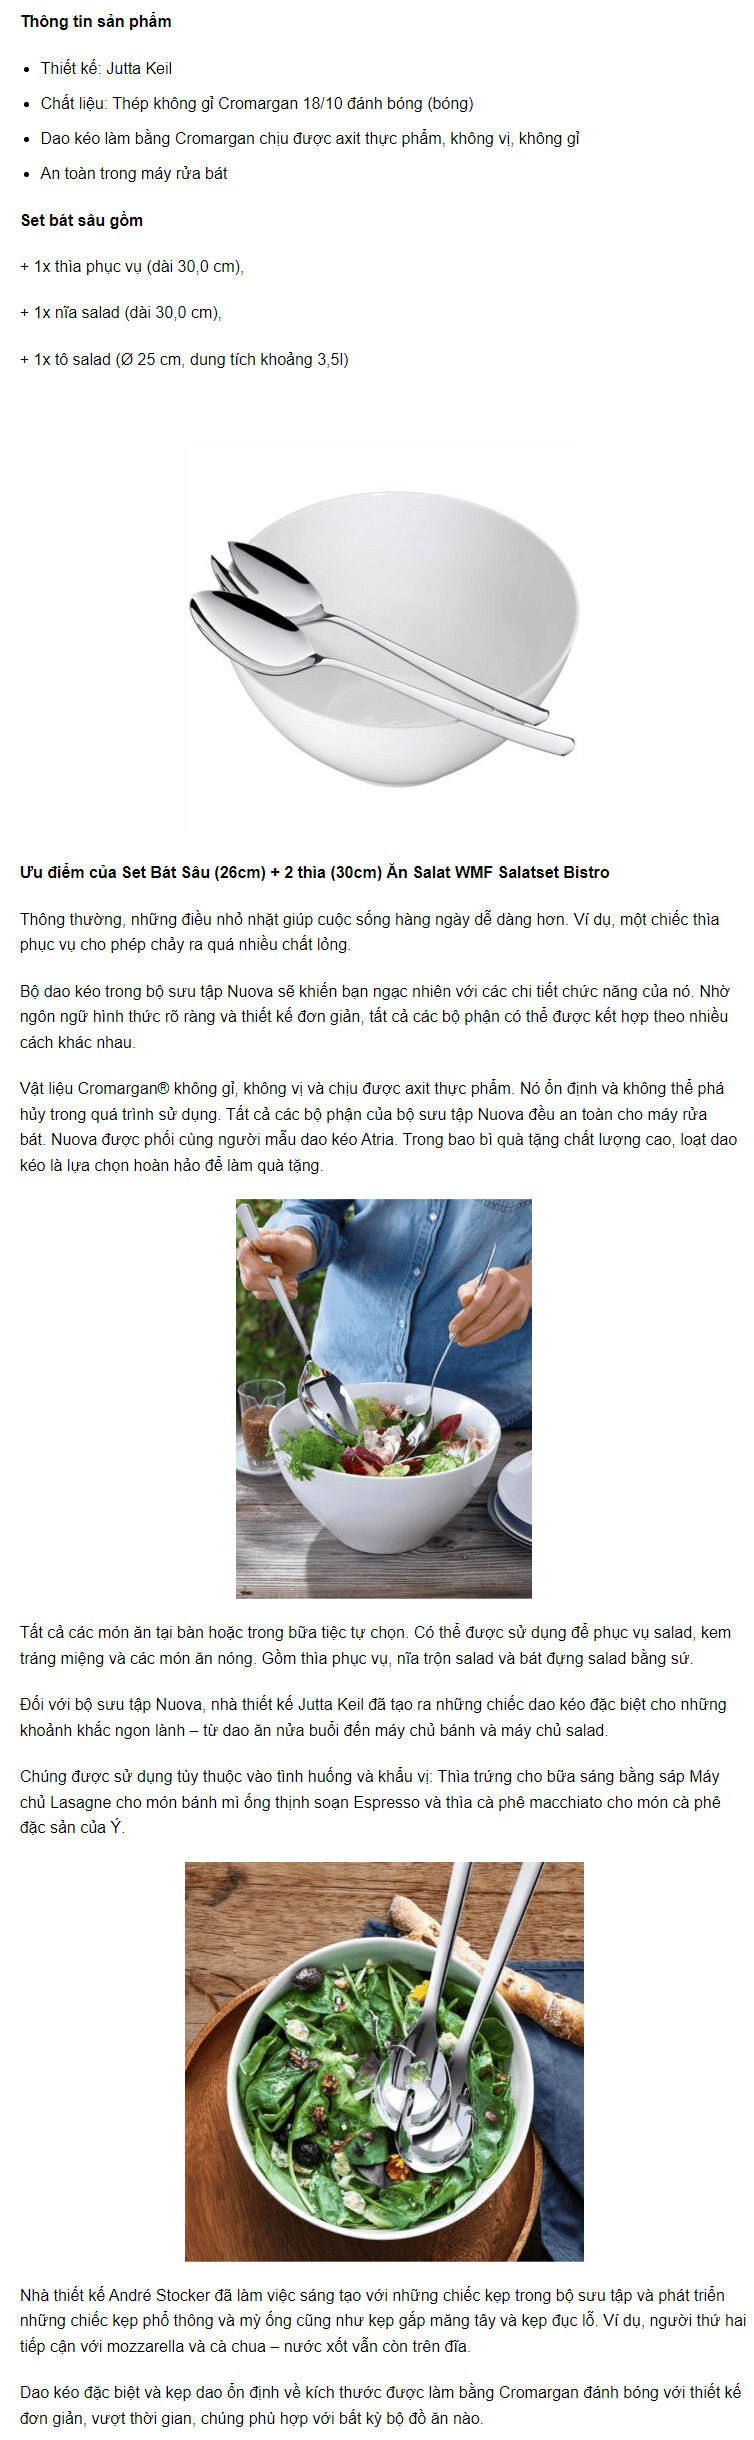 Set Bát Sâu (26cm) + 2 thìa (30cm) Ăn Salat WMF Salatset Bistro